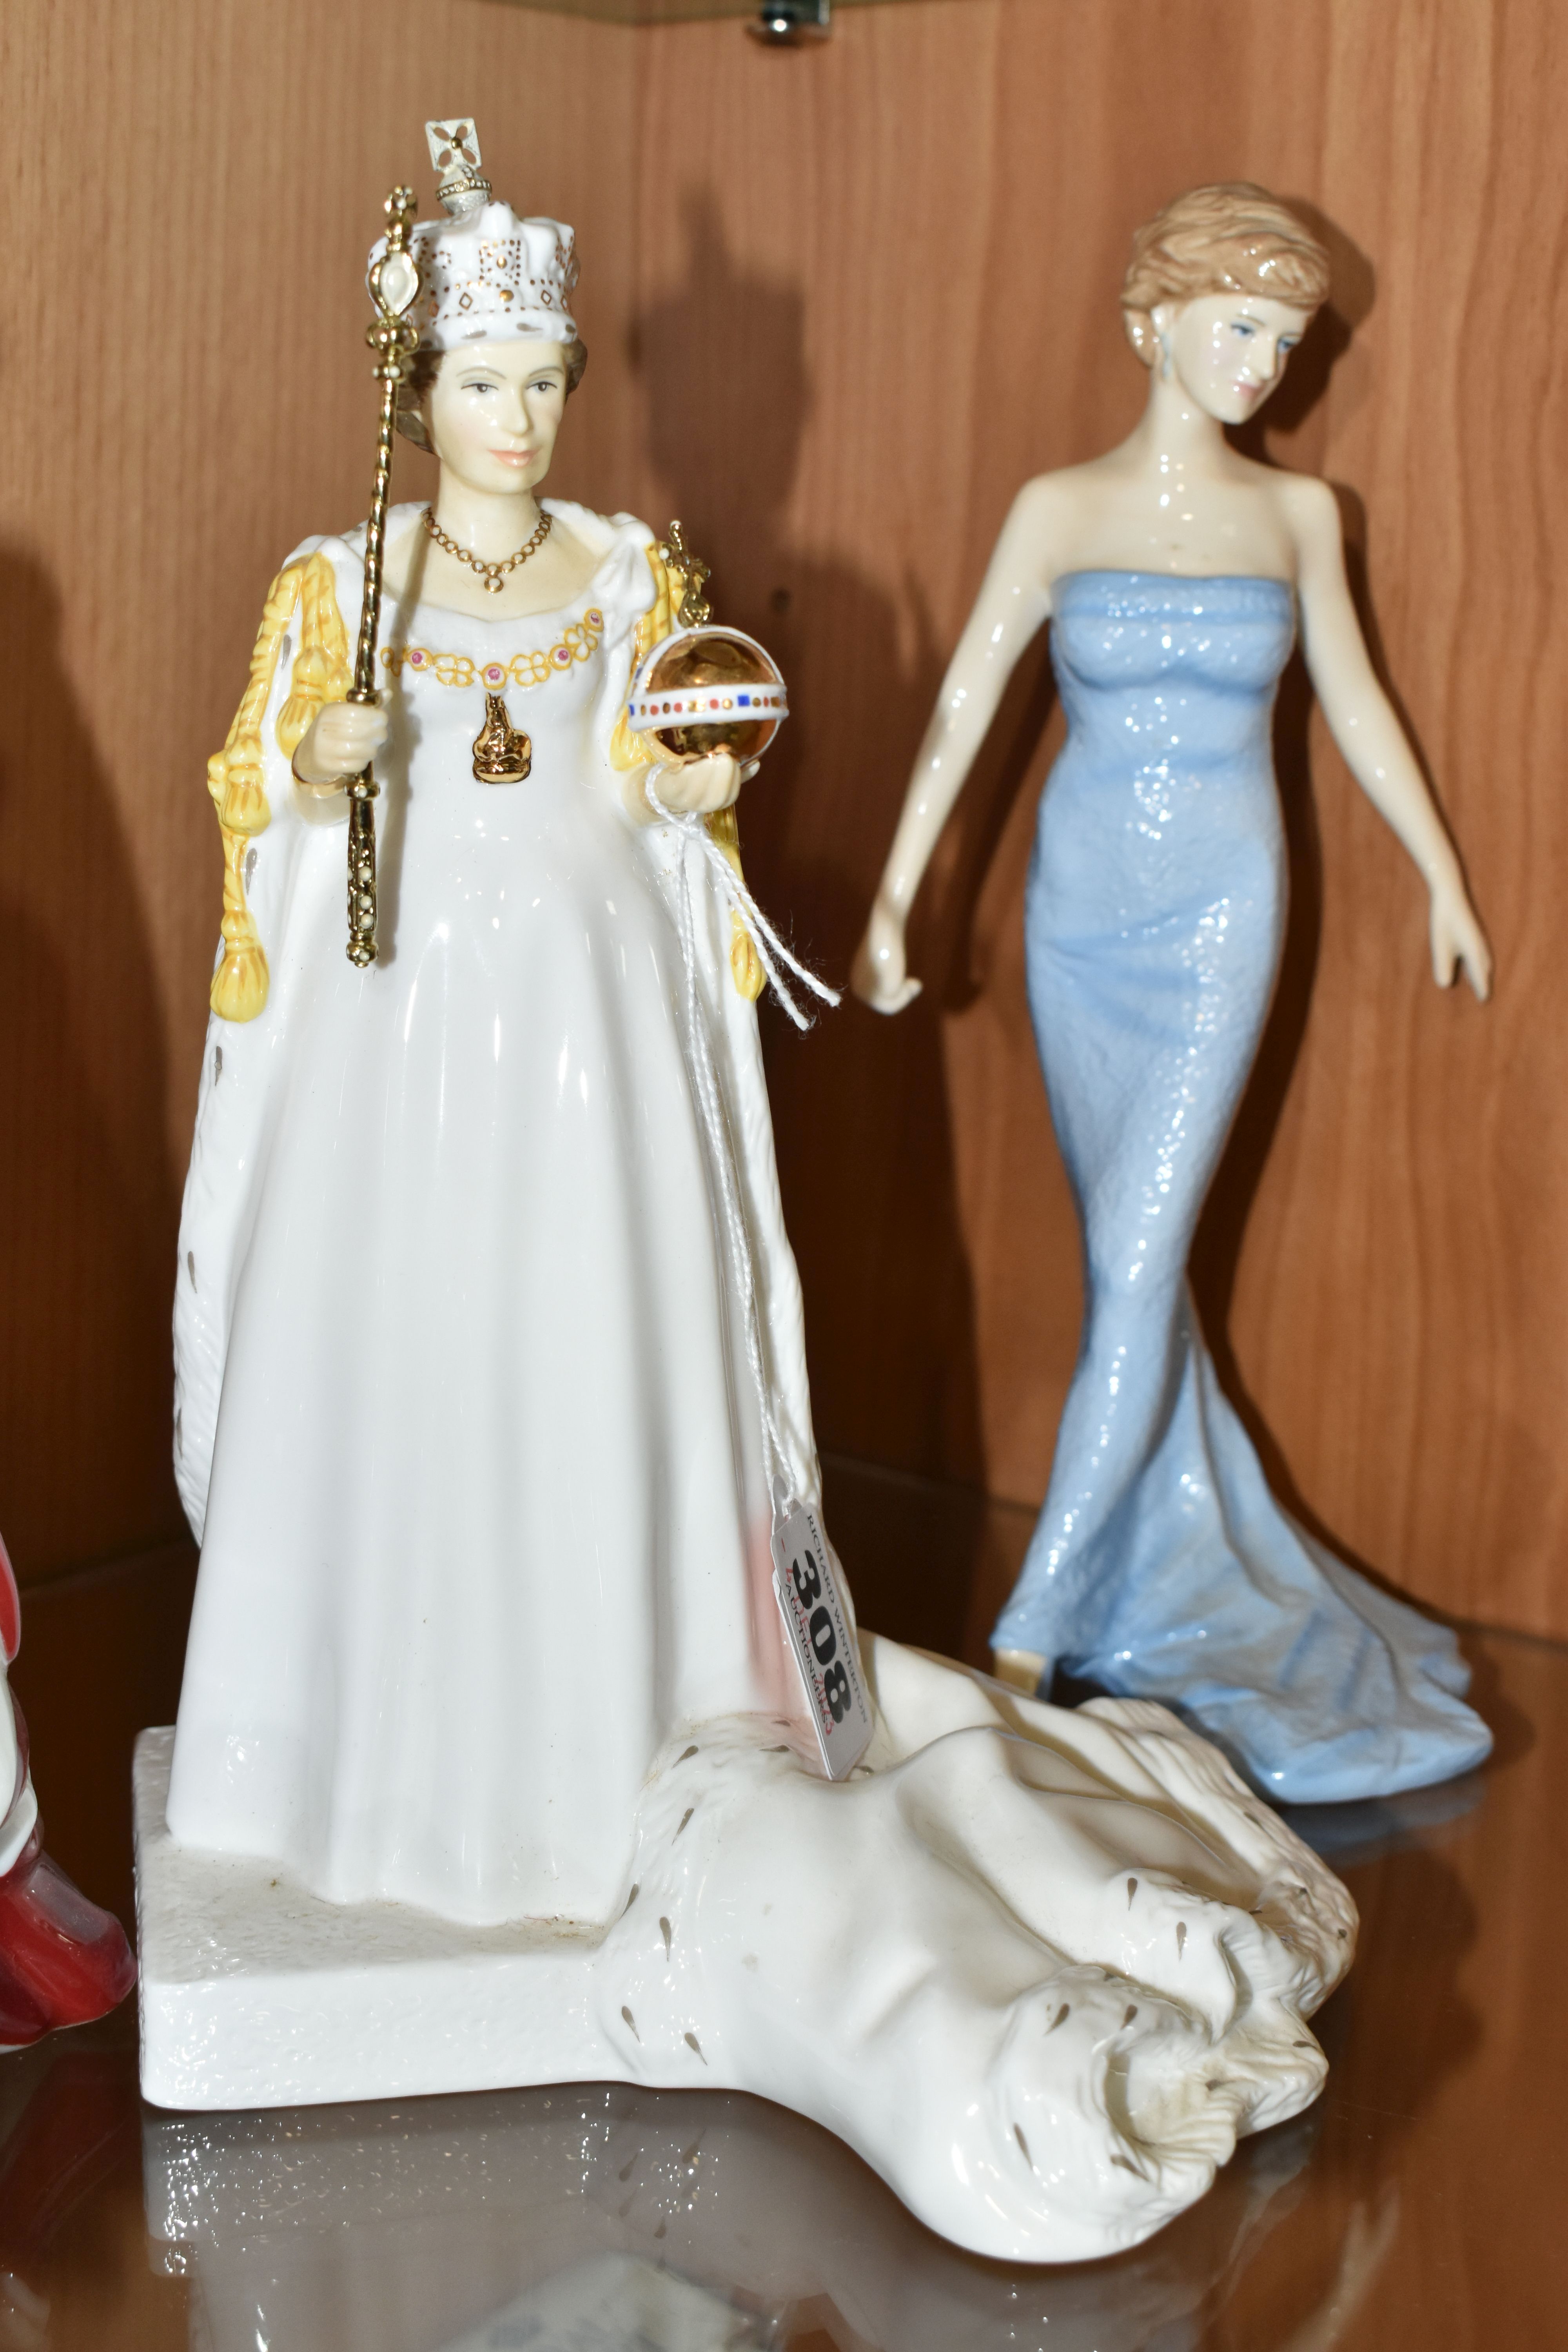 THREE ROYAL FIGURINES, comprising a Coalport figurine of Queen Elizabeth II at her coronation, - Image 3 of 5